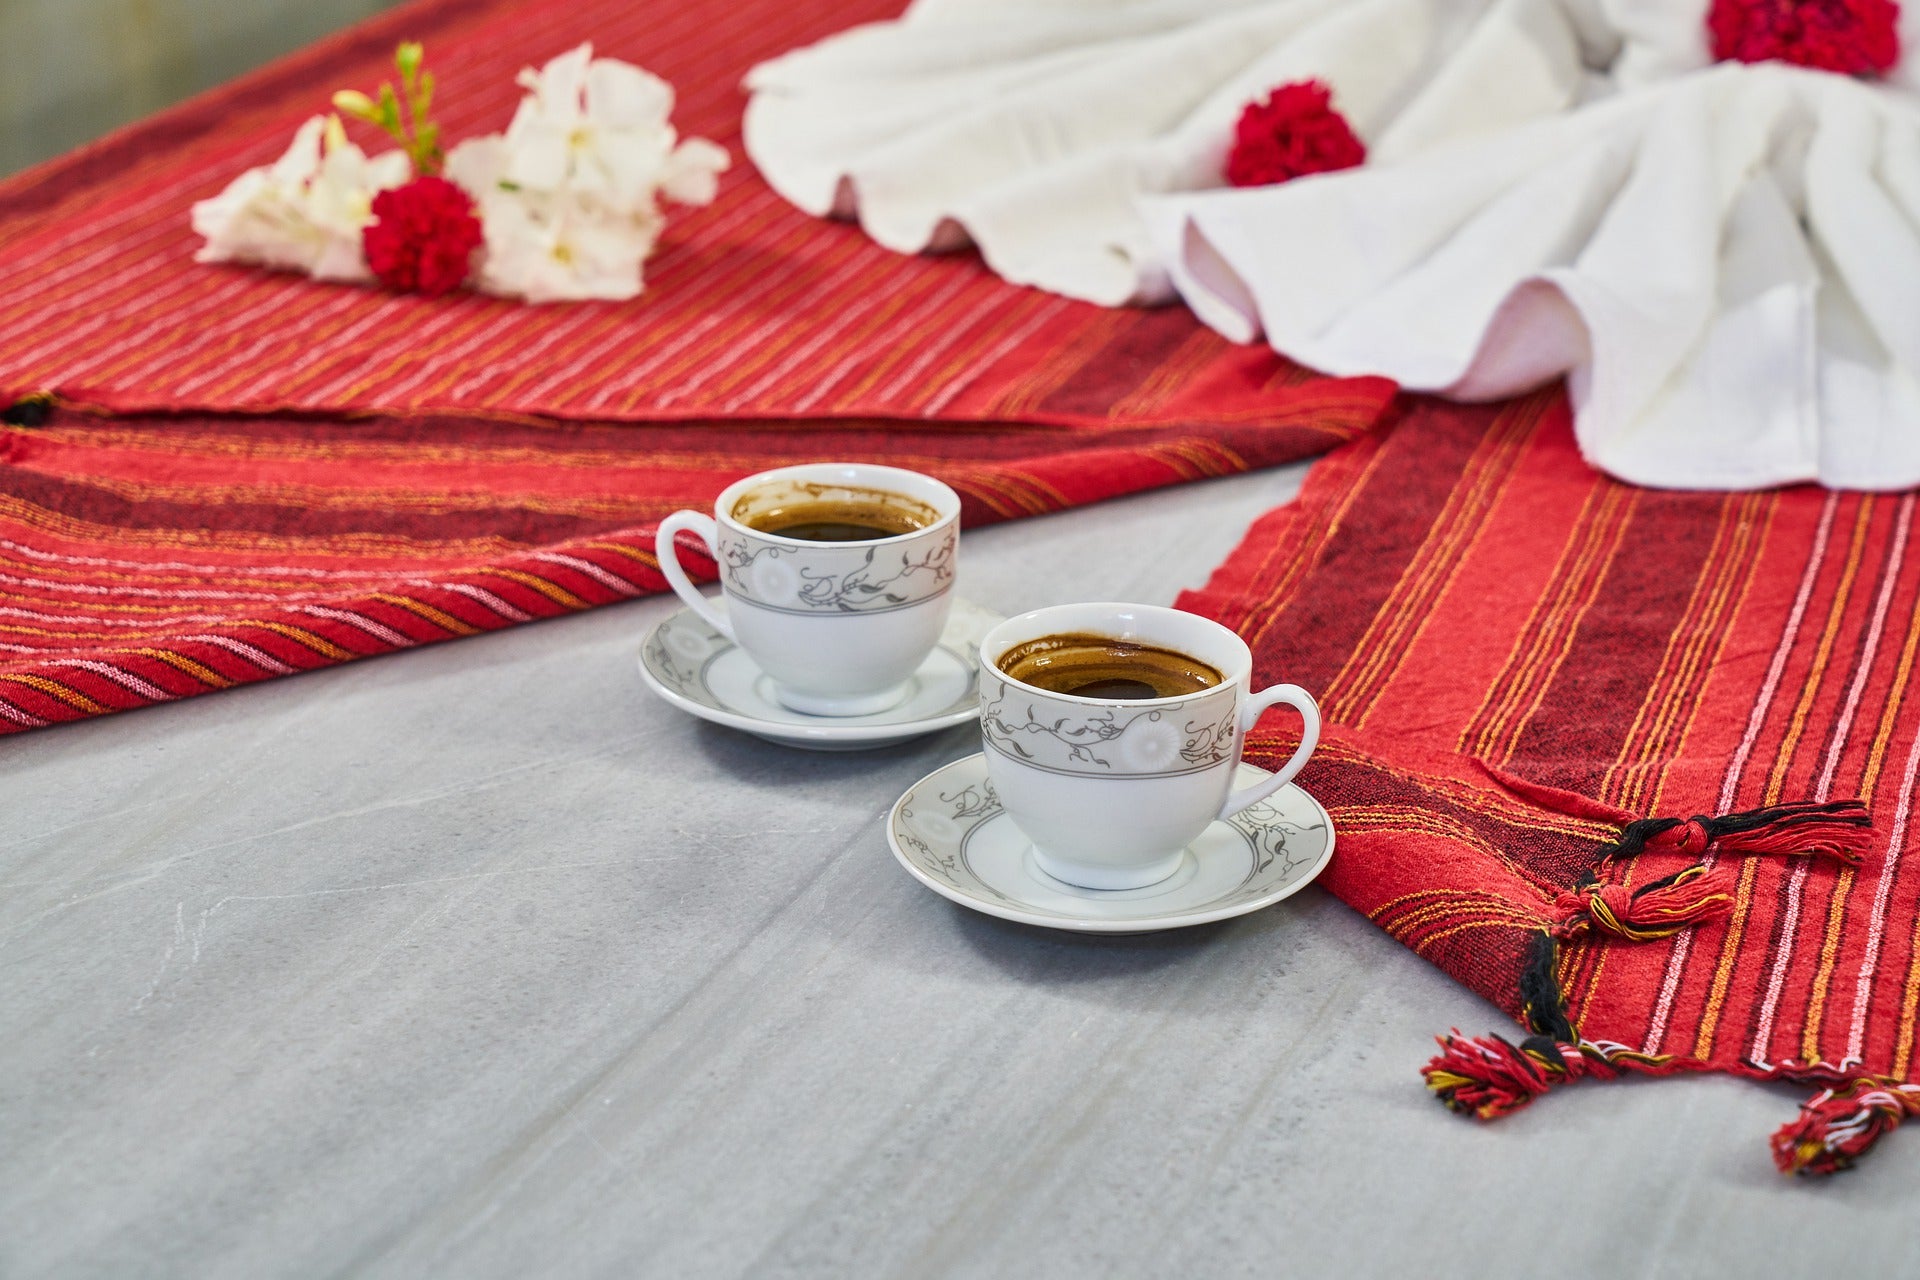 HOW TO MAKE TURKISH COFFEE- What is Turkish coffee?